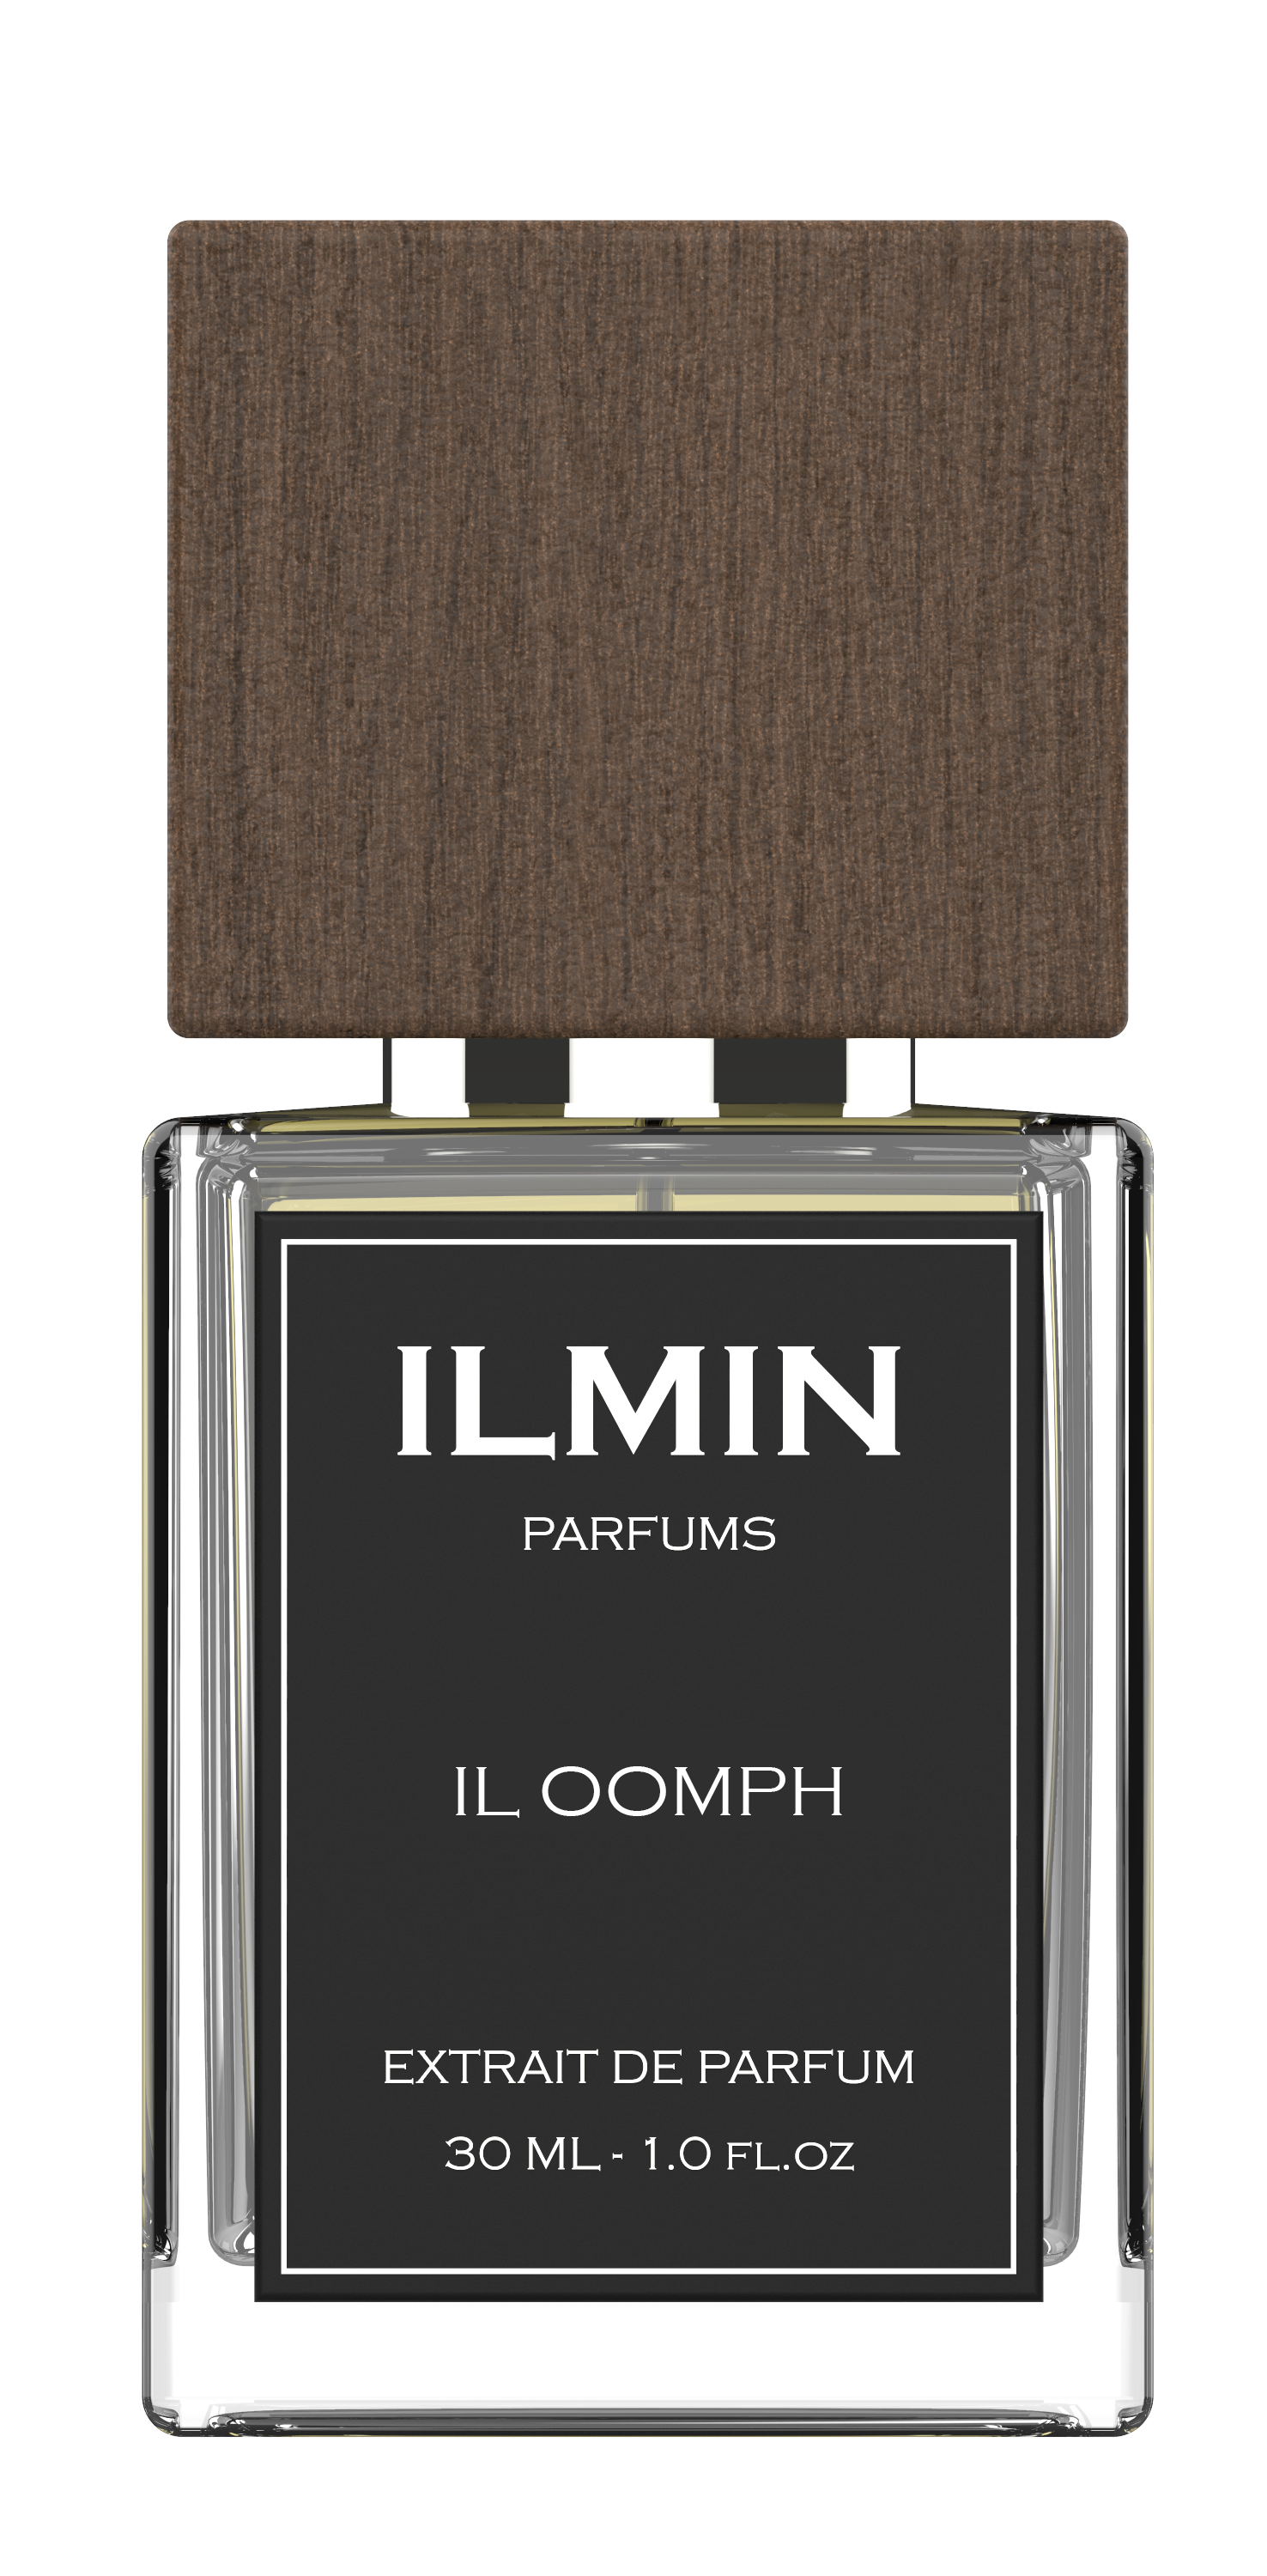 ILMIN Parfums IL Extrait Parfum / OOMPH ILMIN 1oz 30ml – Spray OFFICIAL De USA